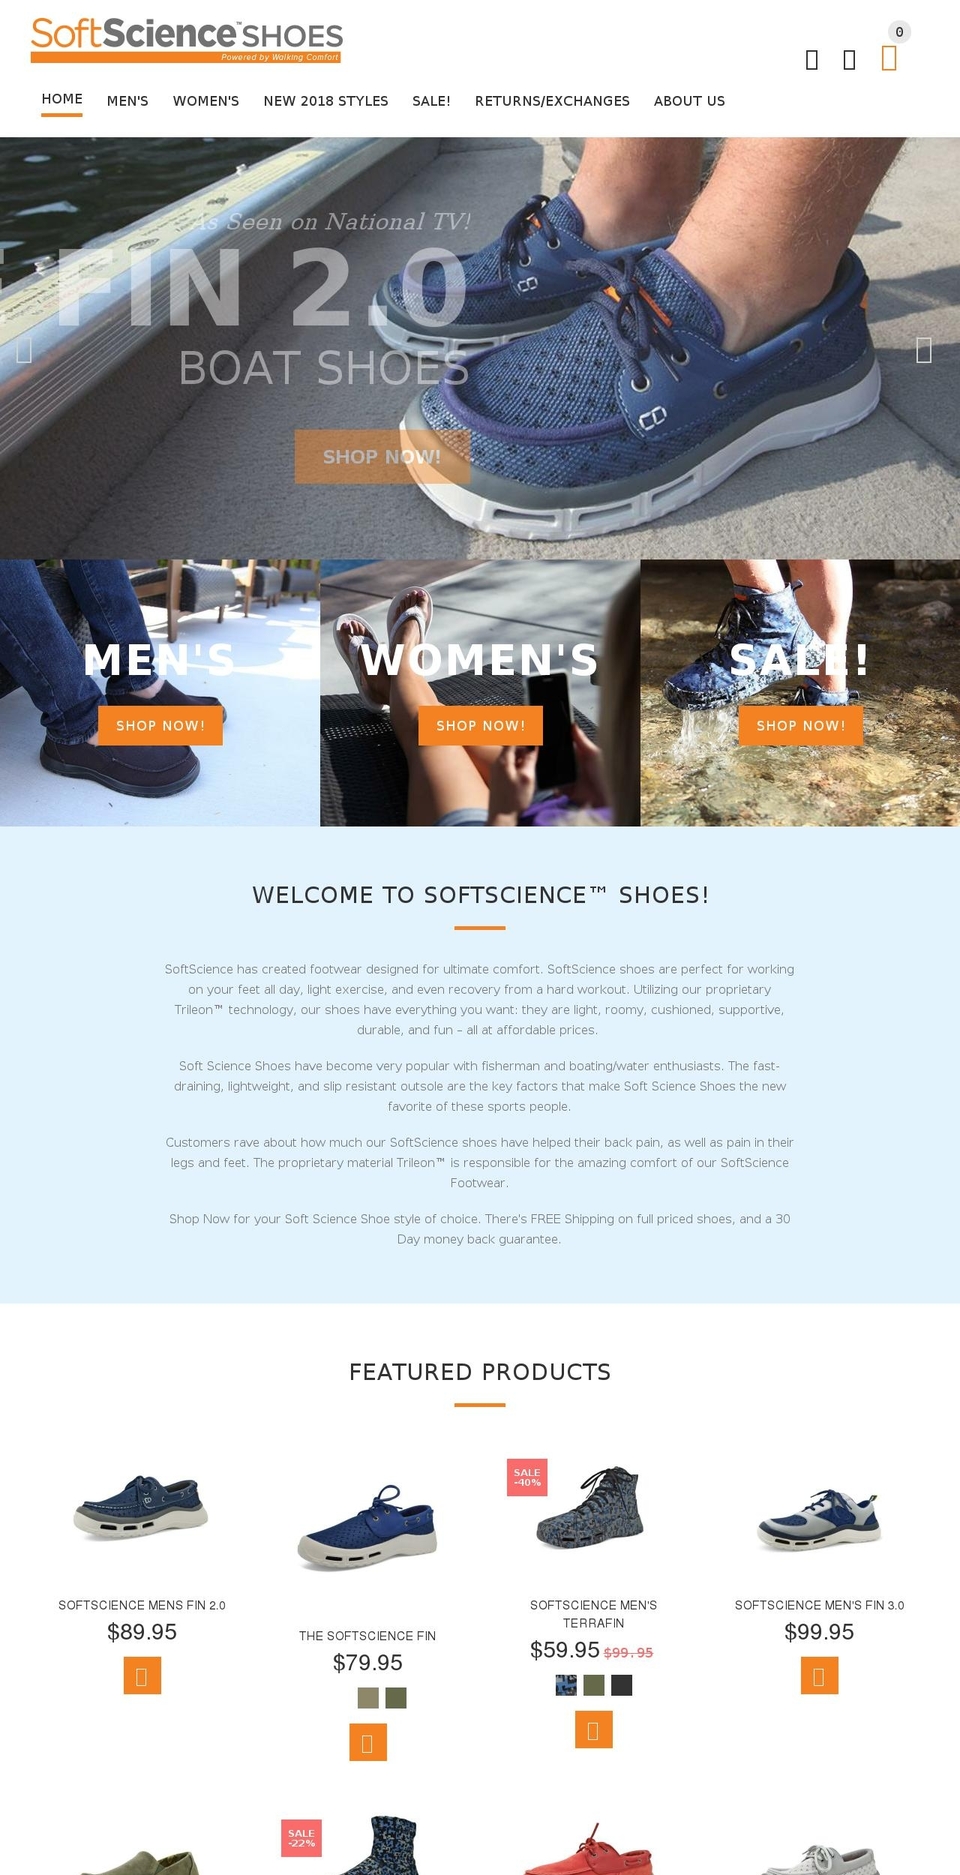 yourstore-v2-1-6 Shopify theme site example softscienceshoeshop.com